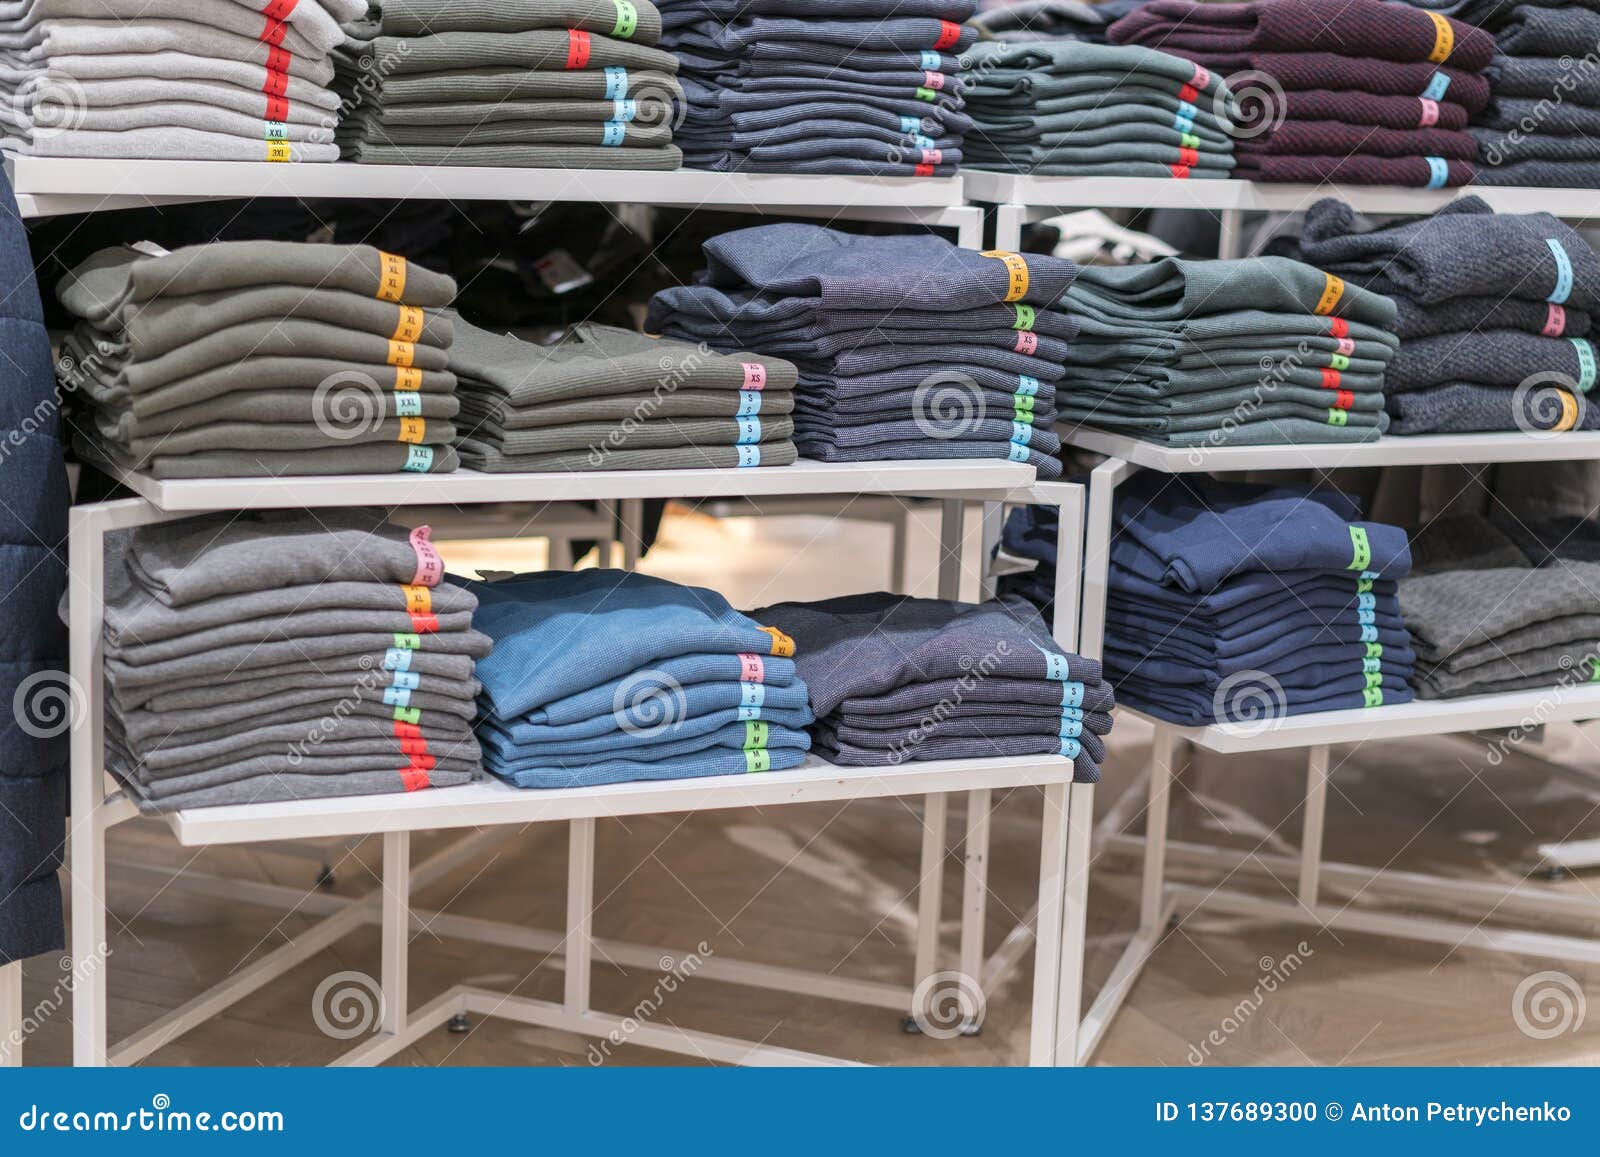 Neat Stacks of Folded Clothing on the Shop Shelves. Color Folding Shirt ...